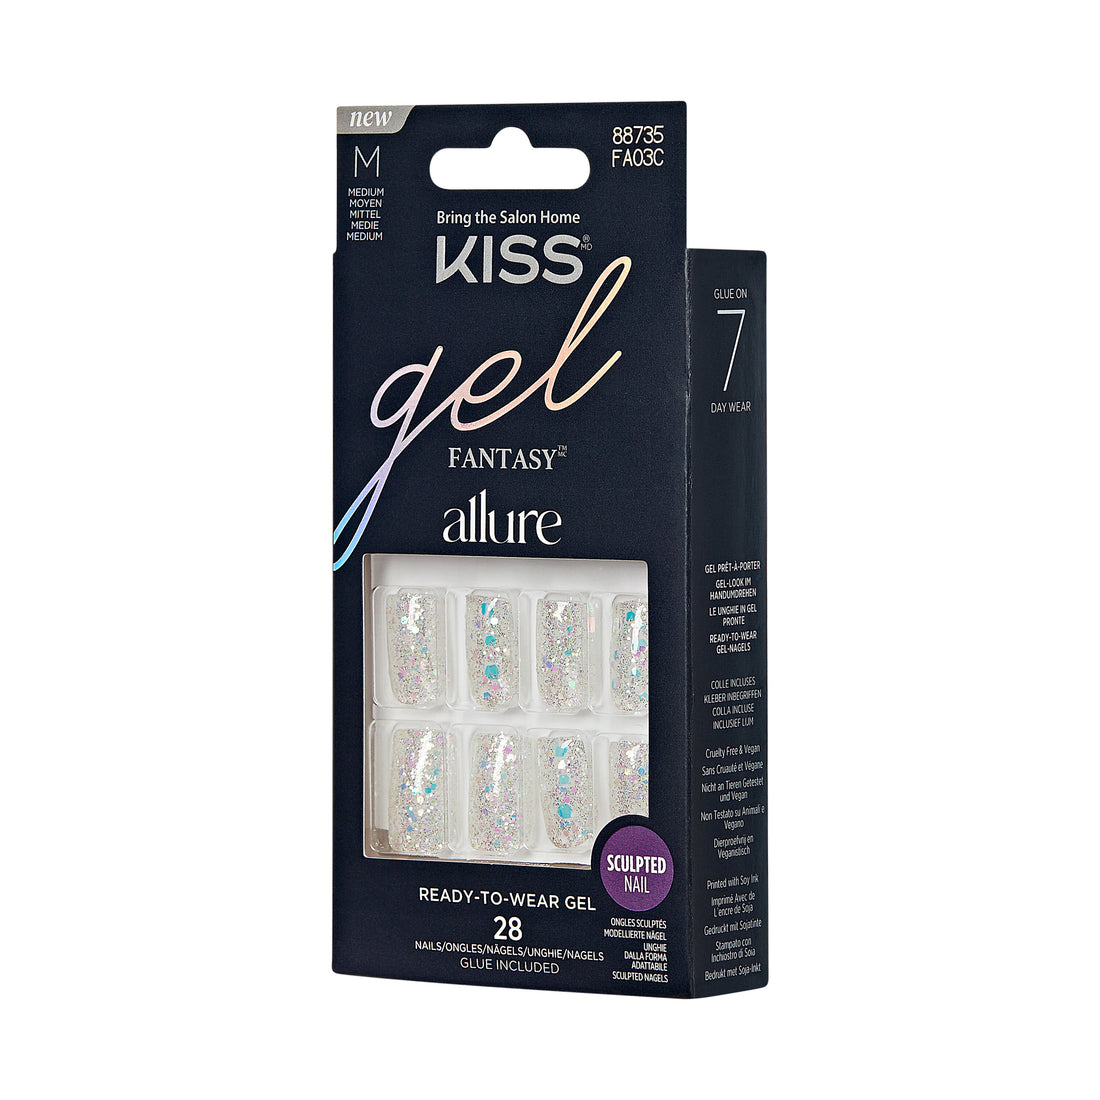 KISS Gel Fantasy Allure Press-On Nails, How Dazzling, Stříbrná, Medium Hranatý, 31 ks